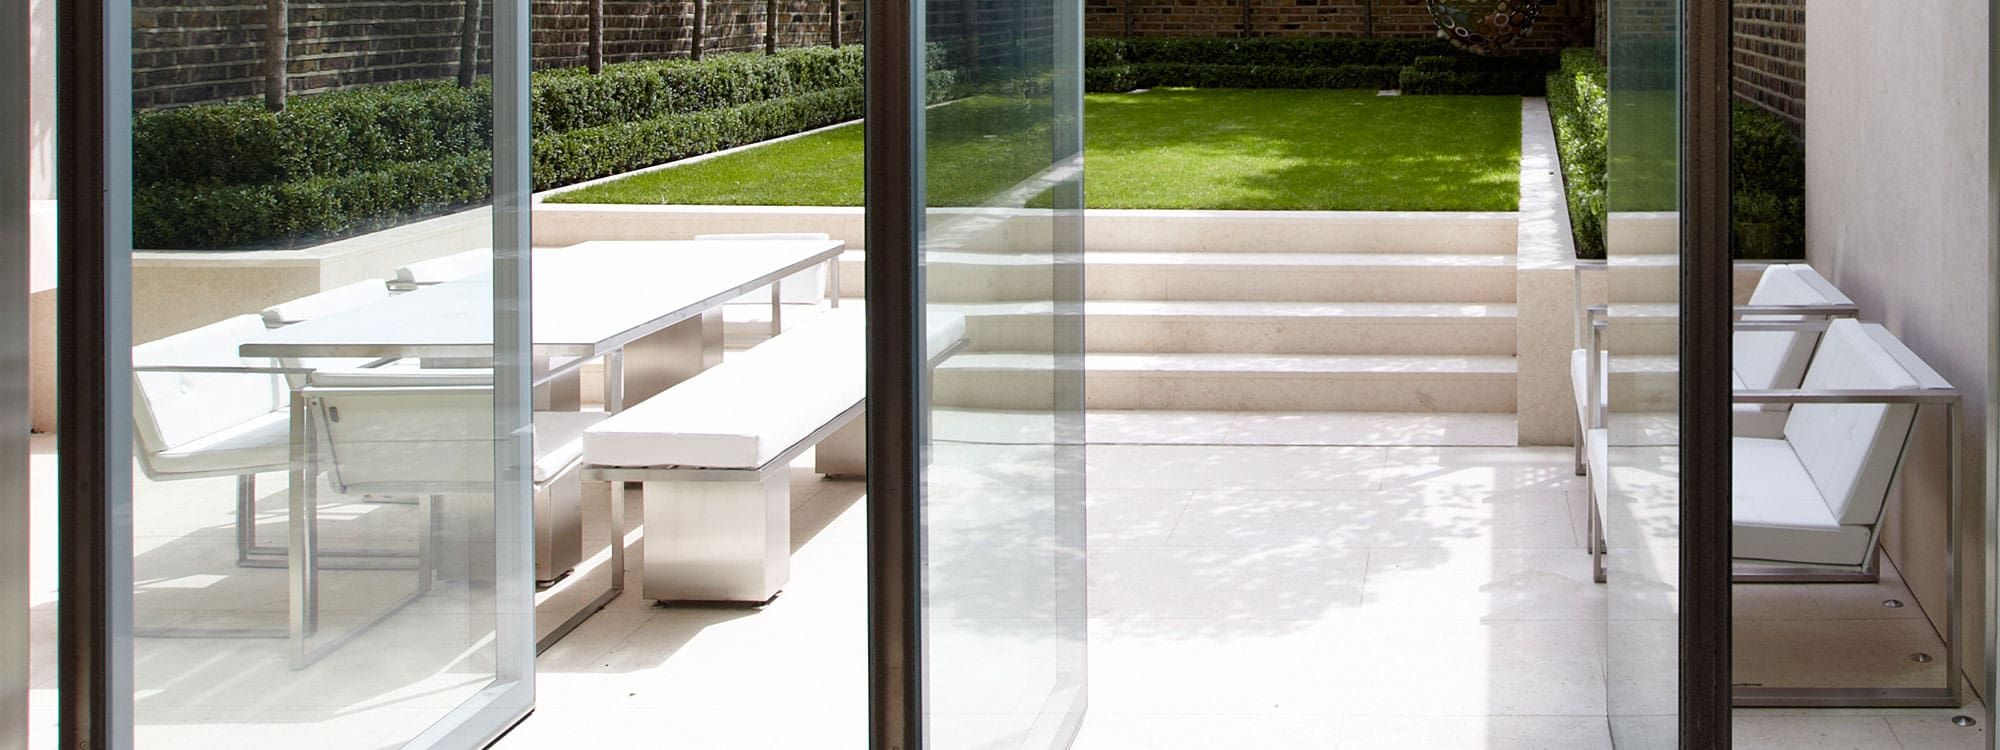 Image of FueraDentro minimalist design outdoor furniture in London back garden